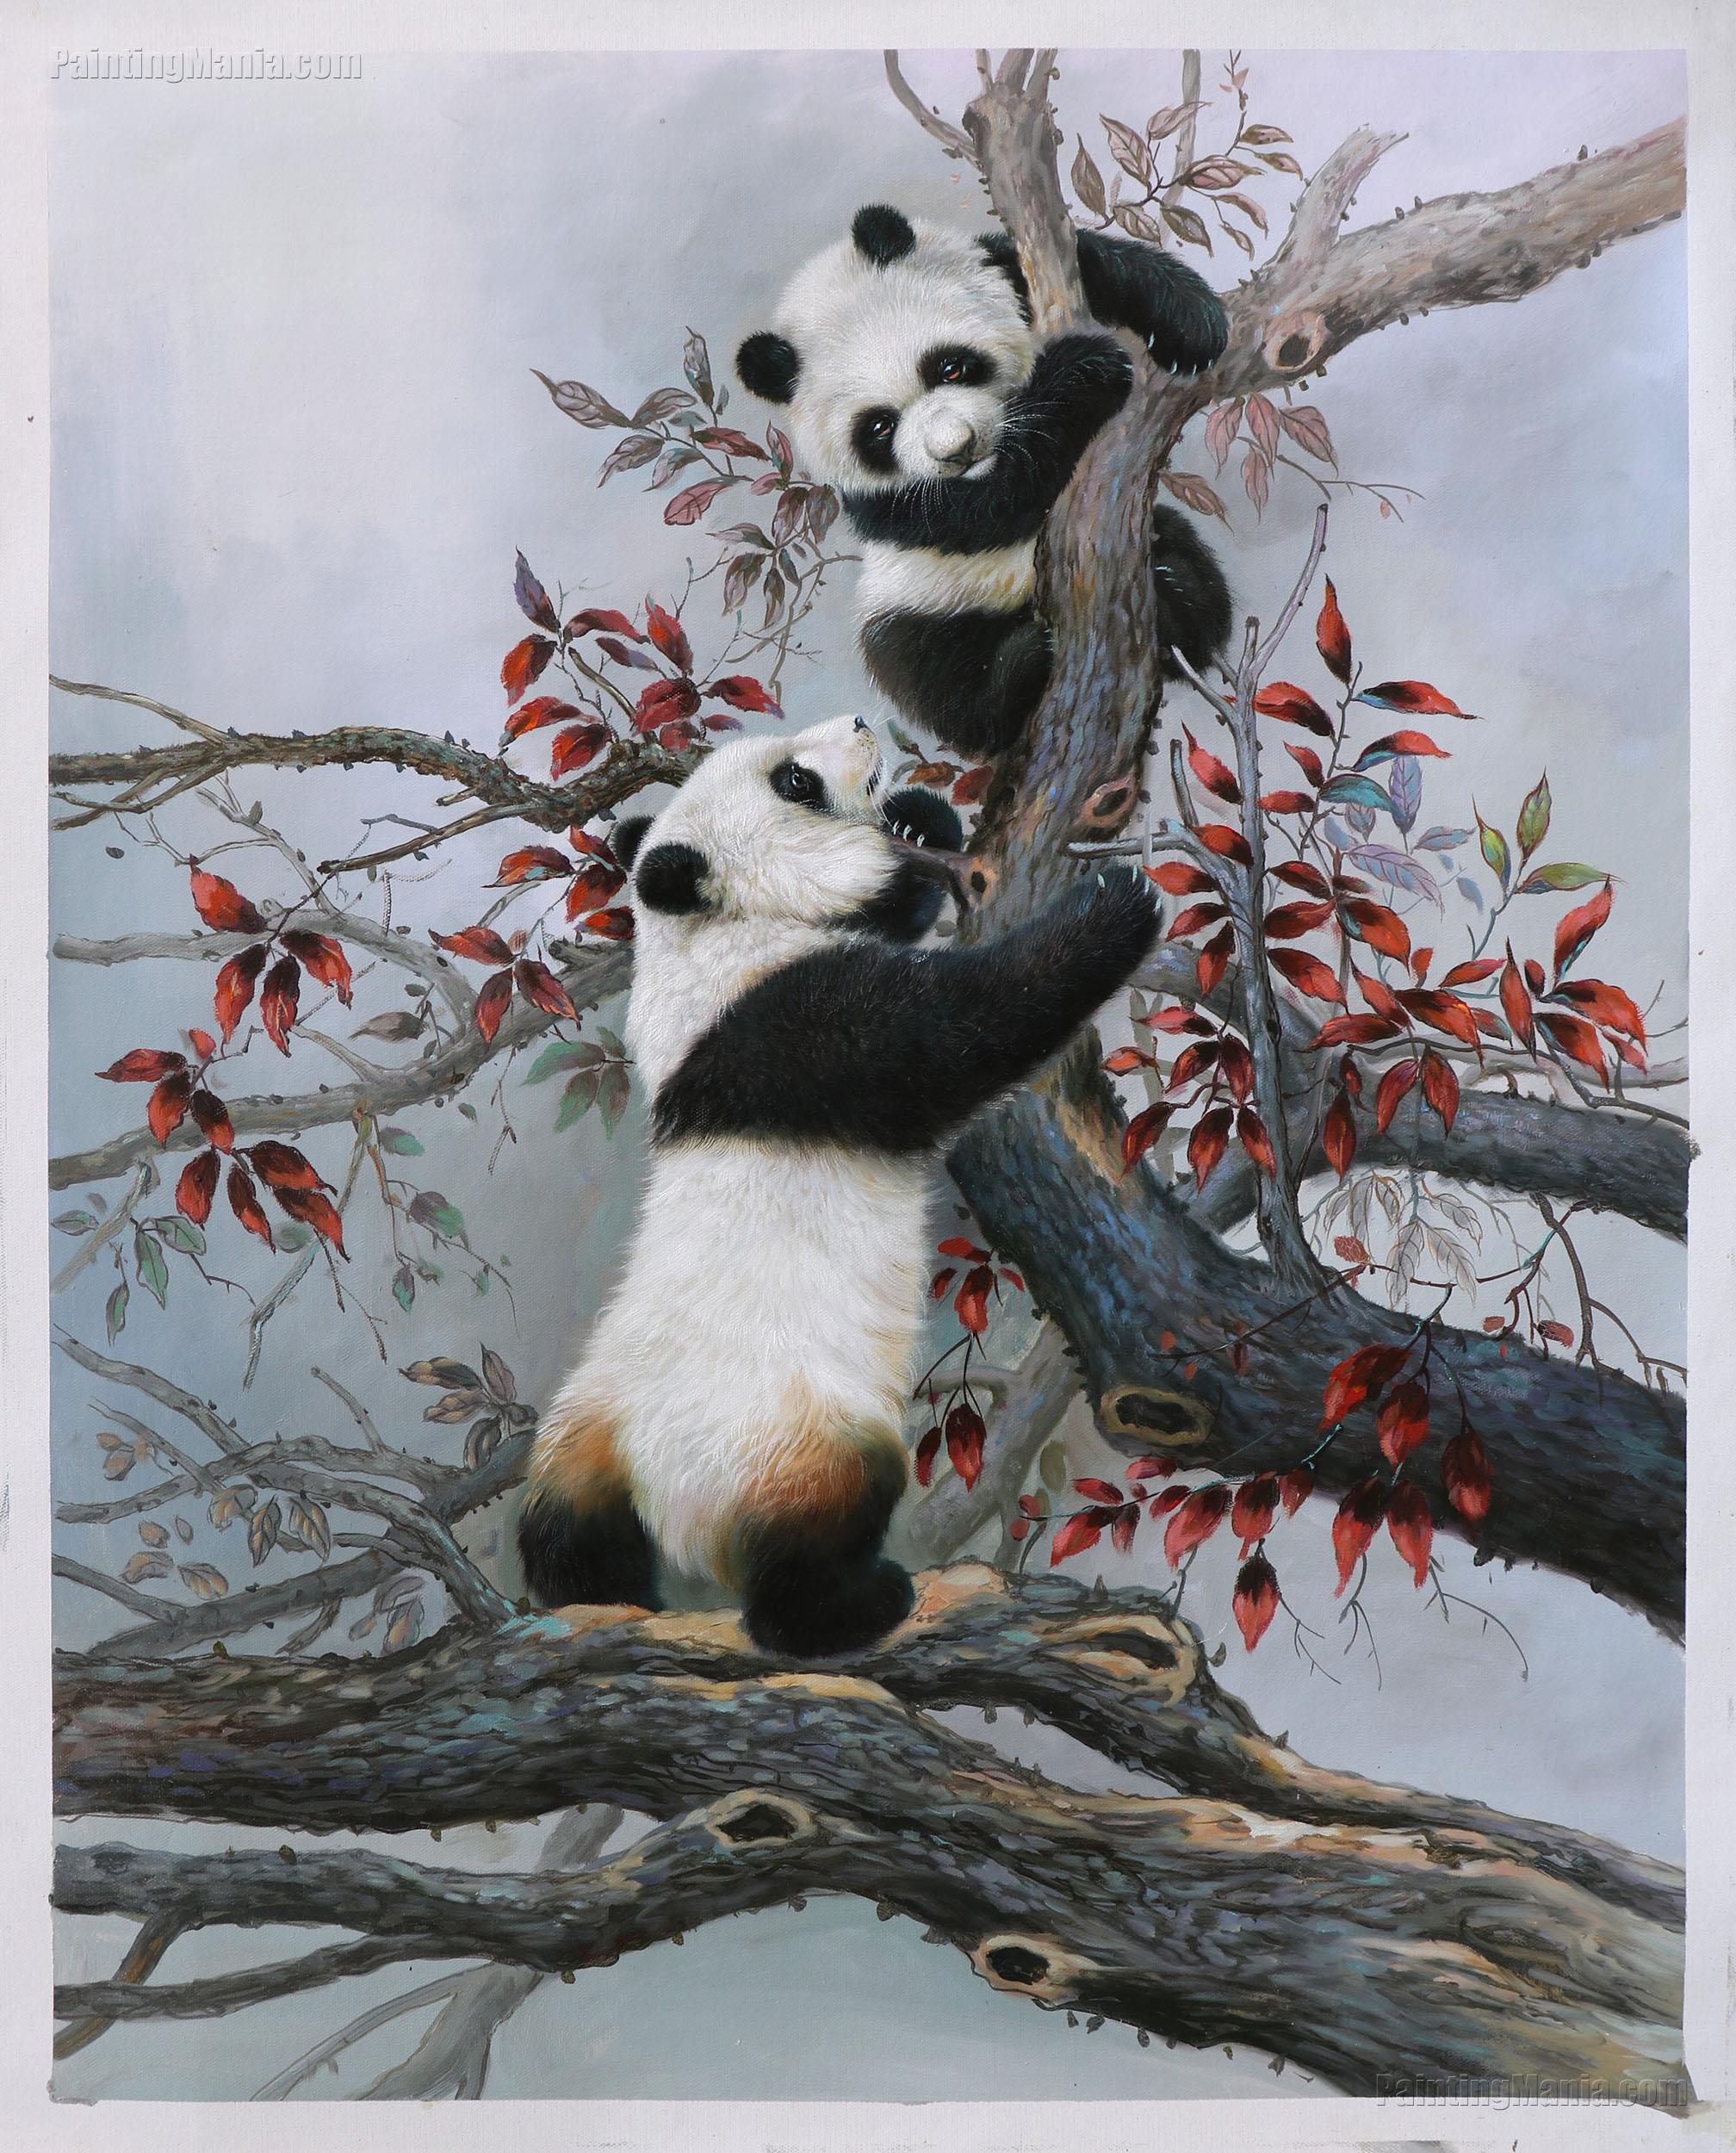 Panda Cub Climbs a Tree